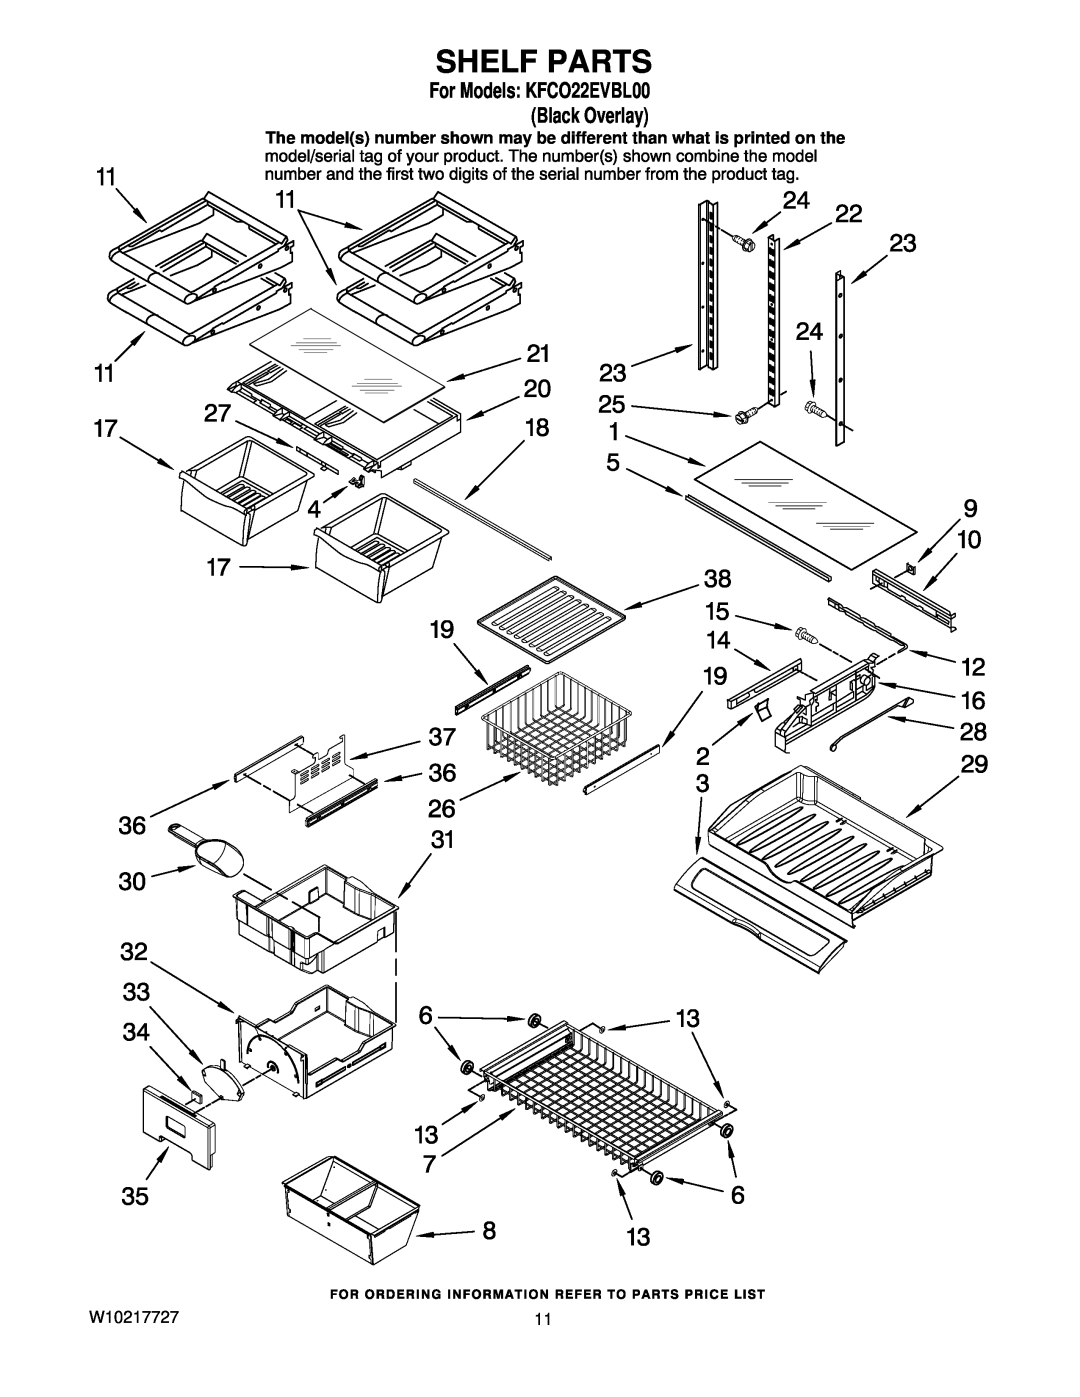 KitchenAid manual Shelf Parts, For Models KFCO22EVBL00 Black Overlay 